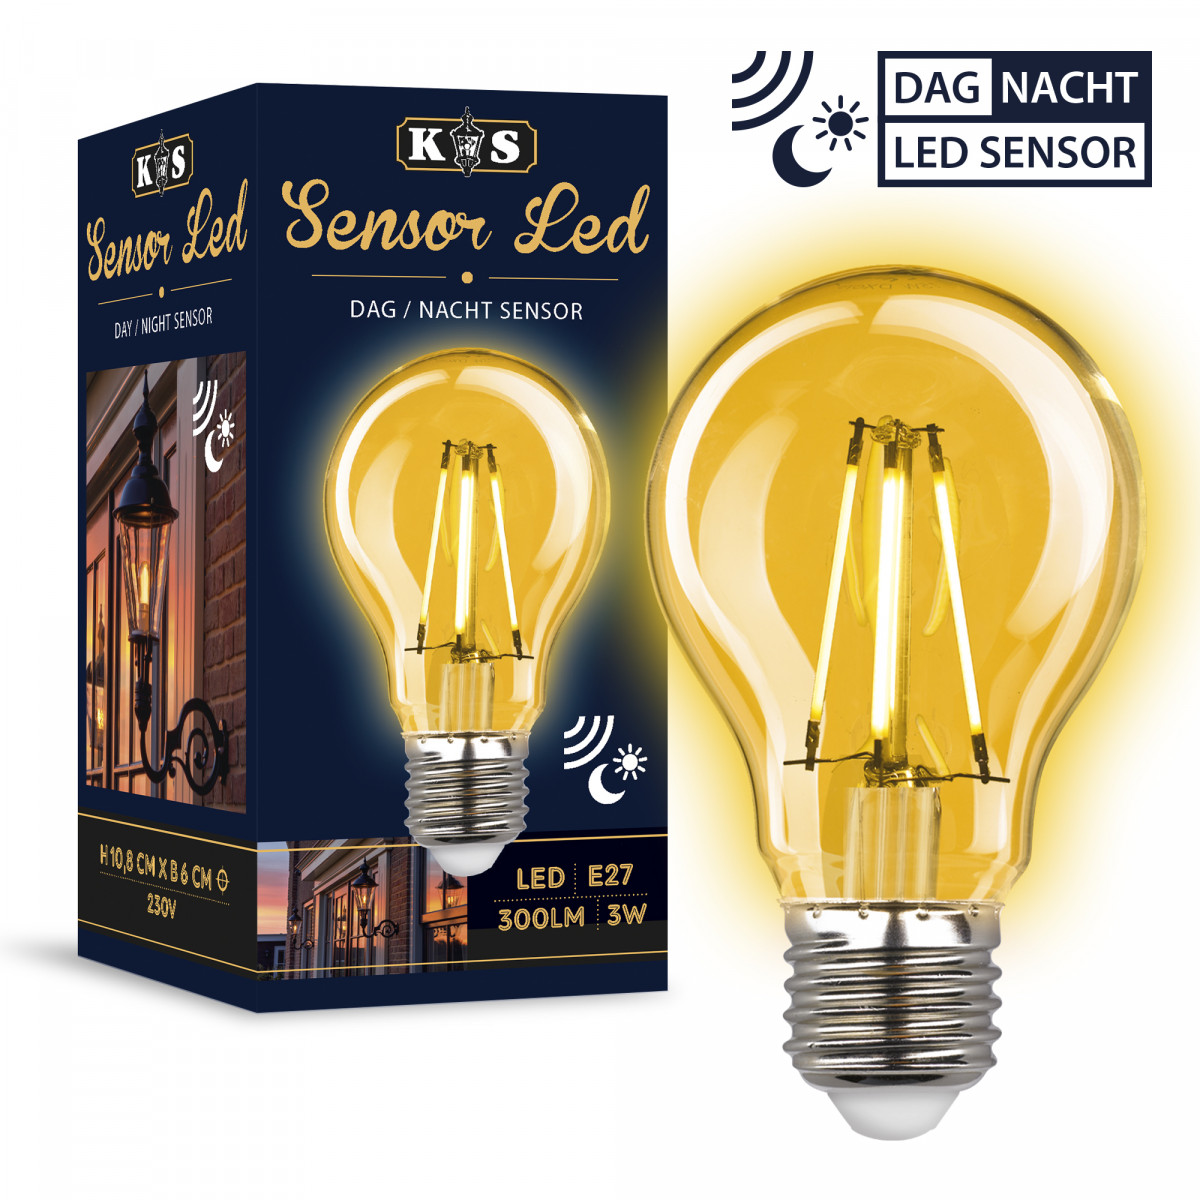 Sensor LED light source